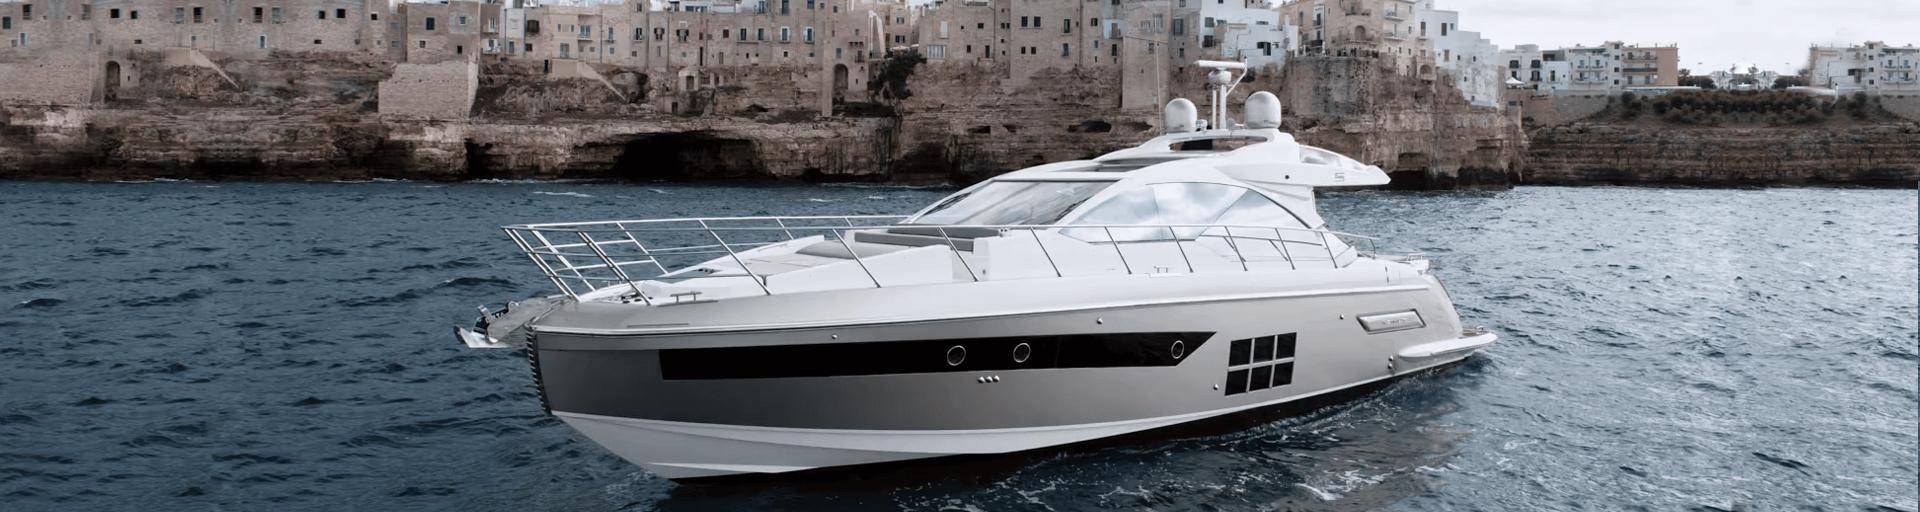 AZIMUT S6 - AB Lease Yacht Charter Belgium Croatia